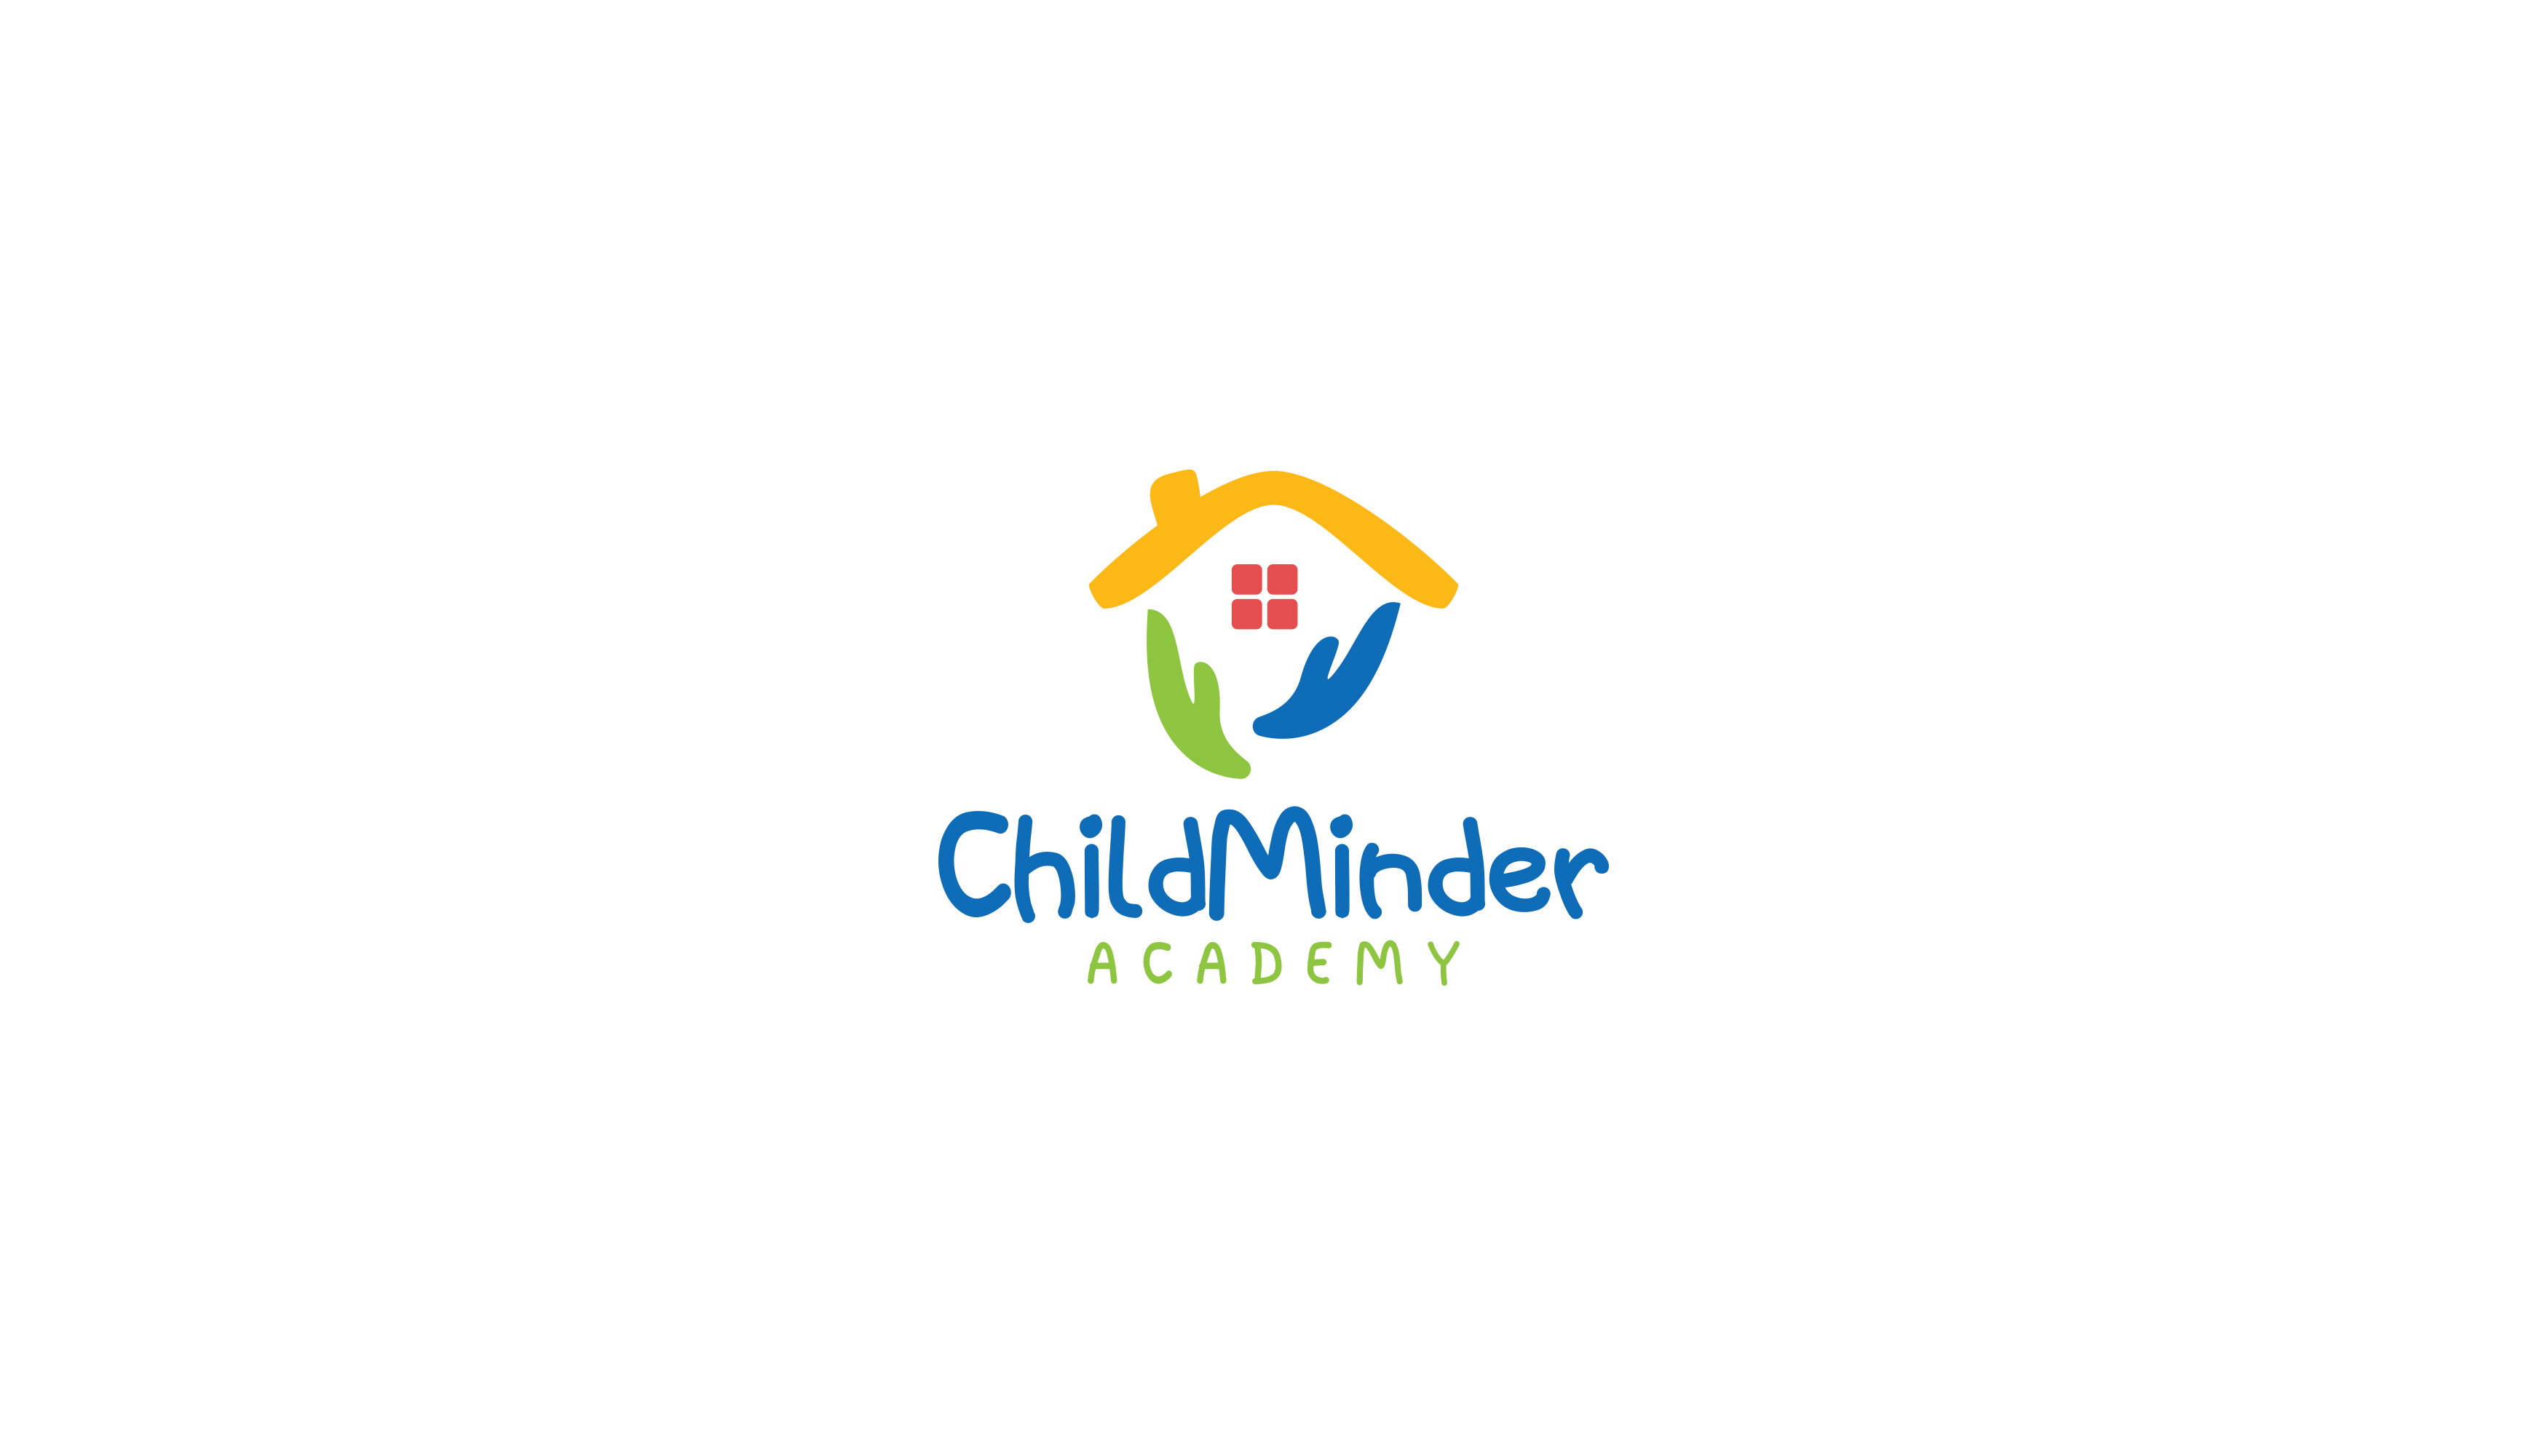 ChildMinder Academy Design #4